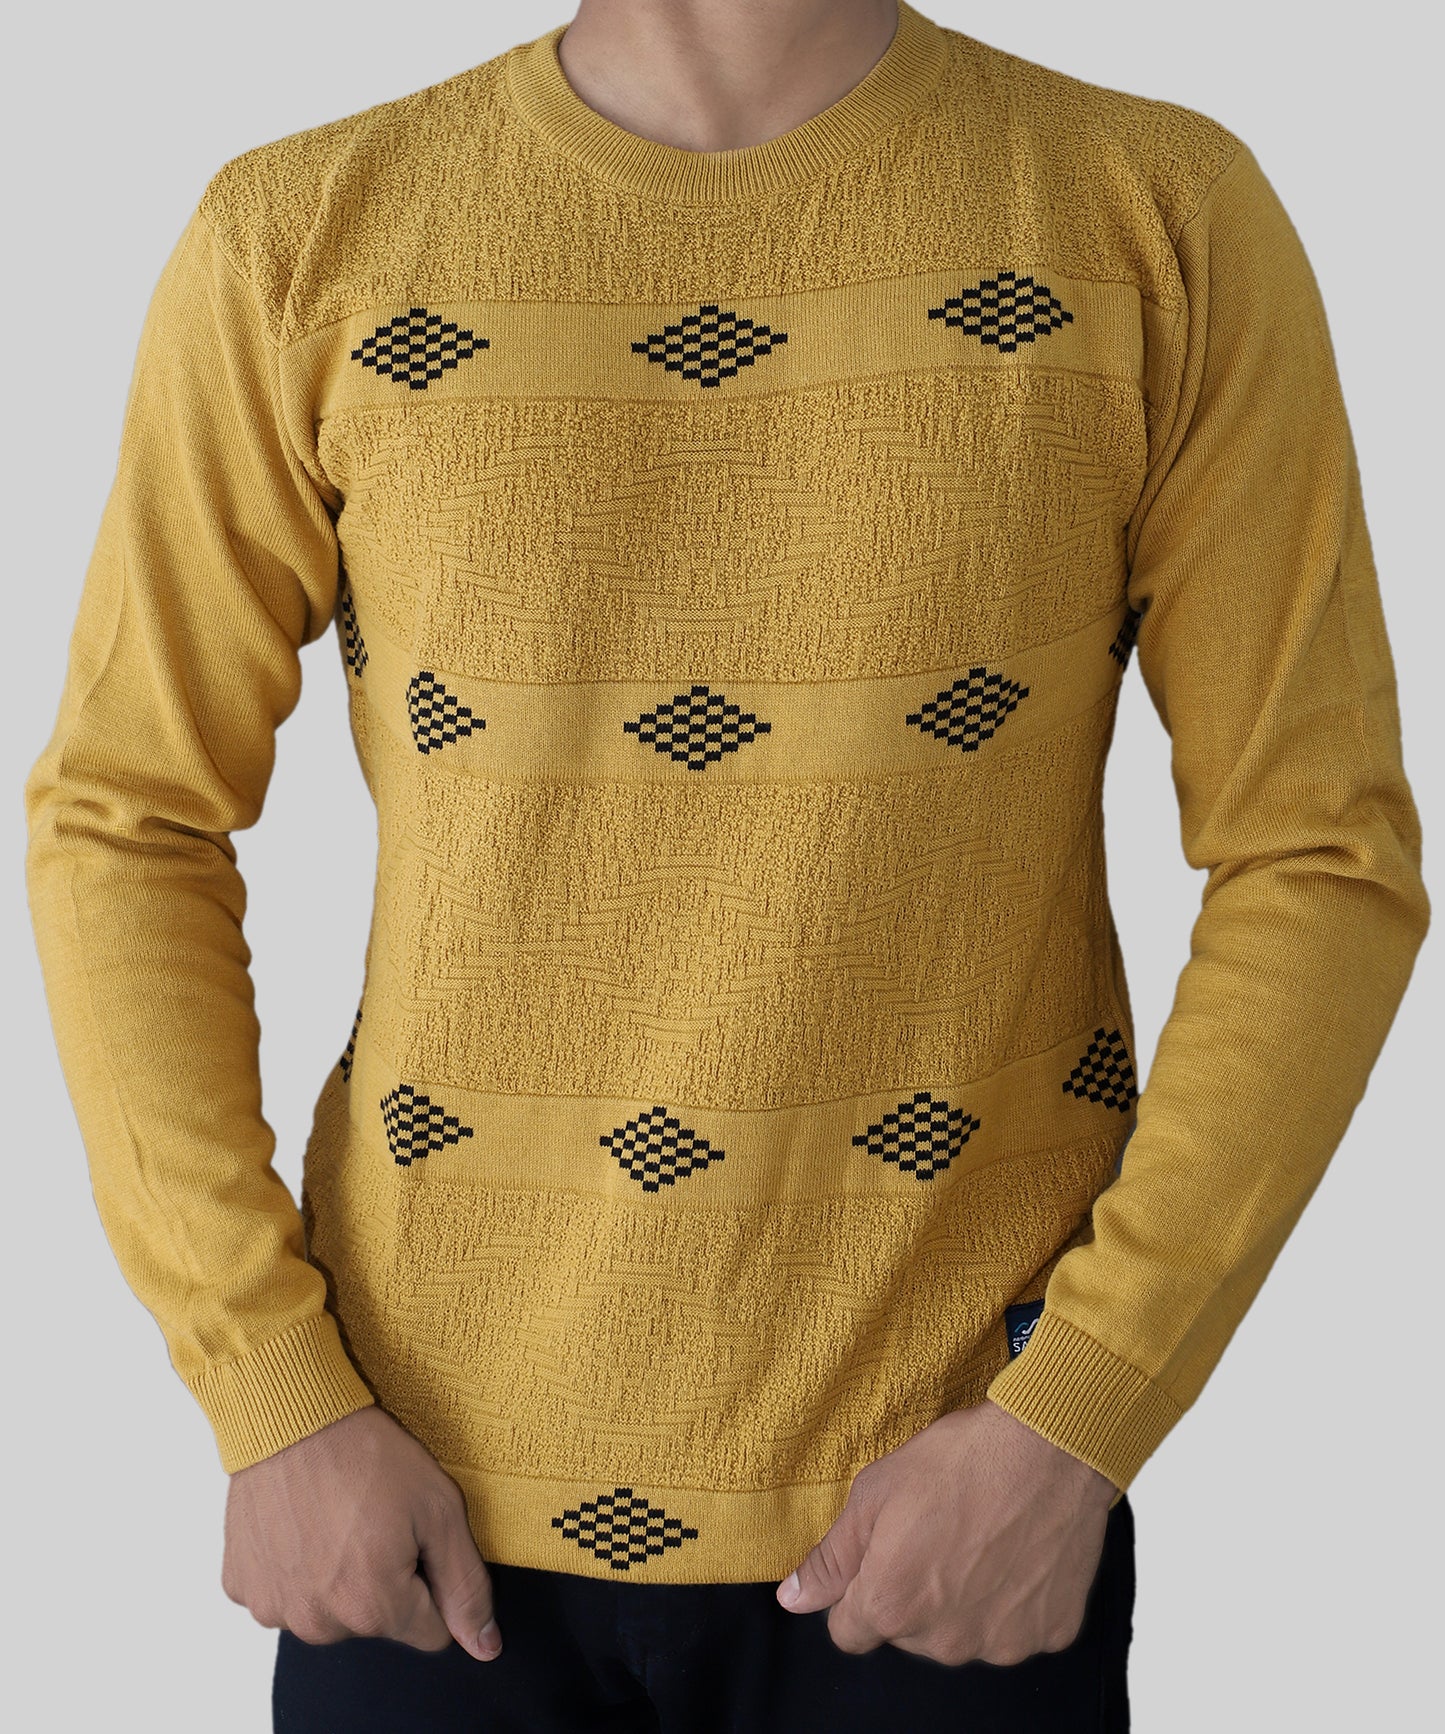 Knitted T-Shirt Men Full Sleeve Dotted Design